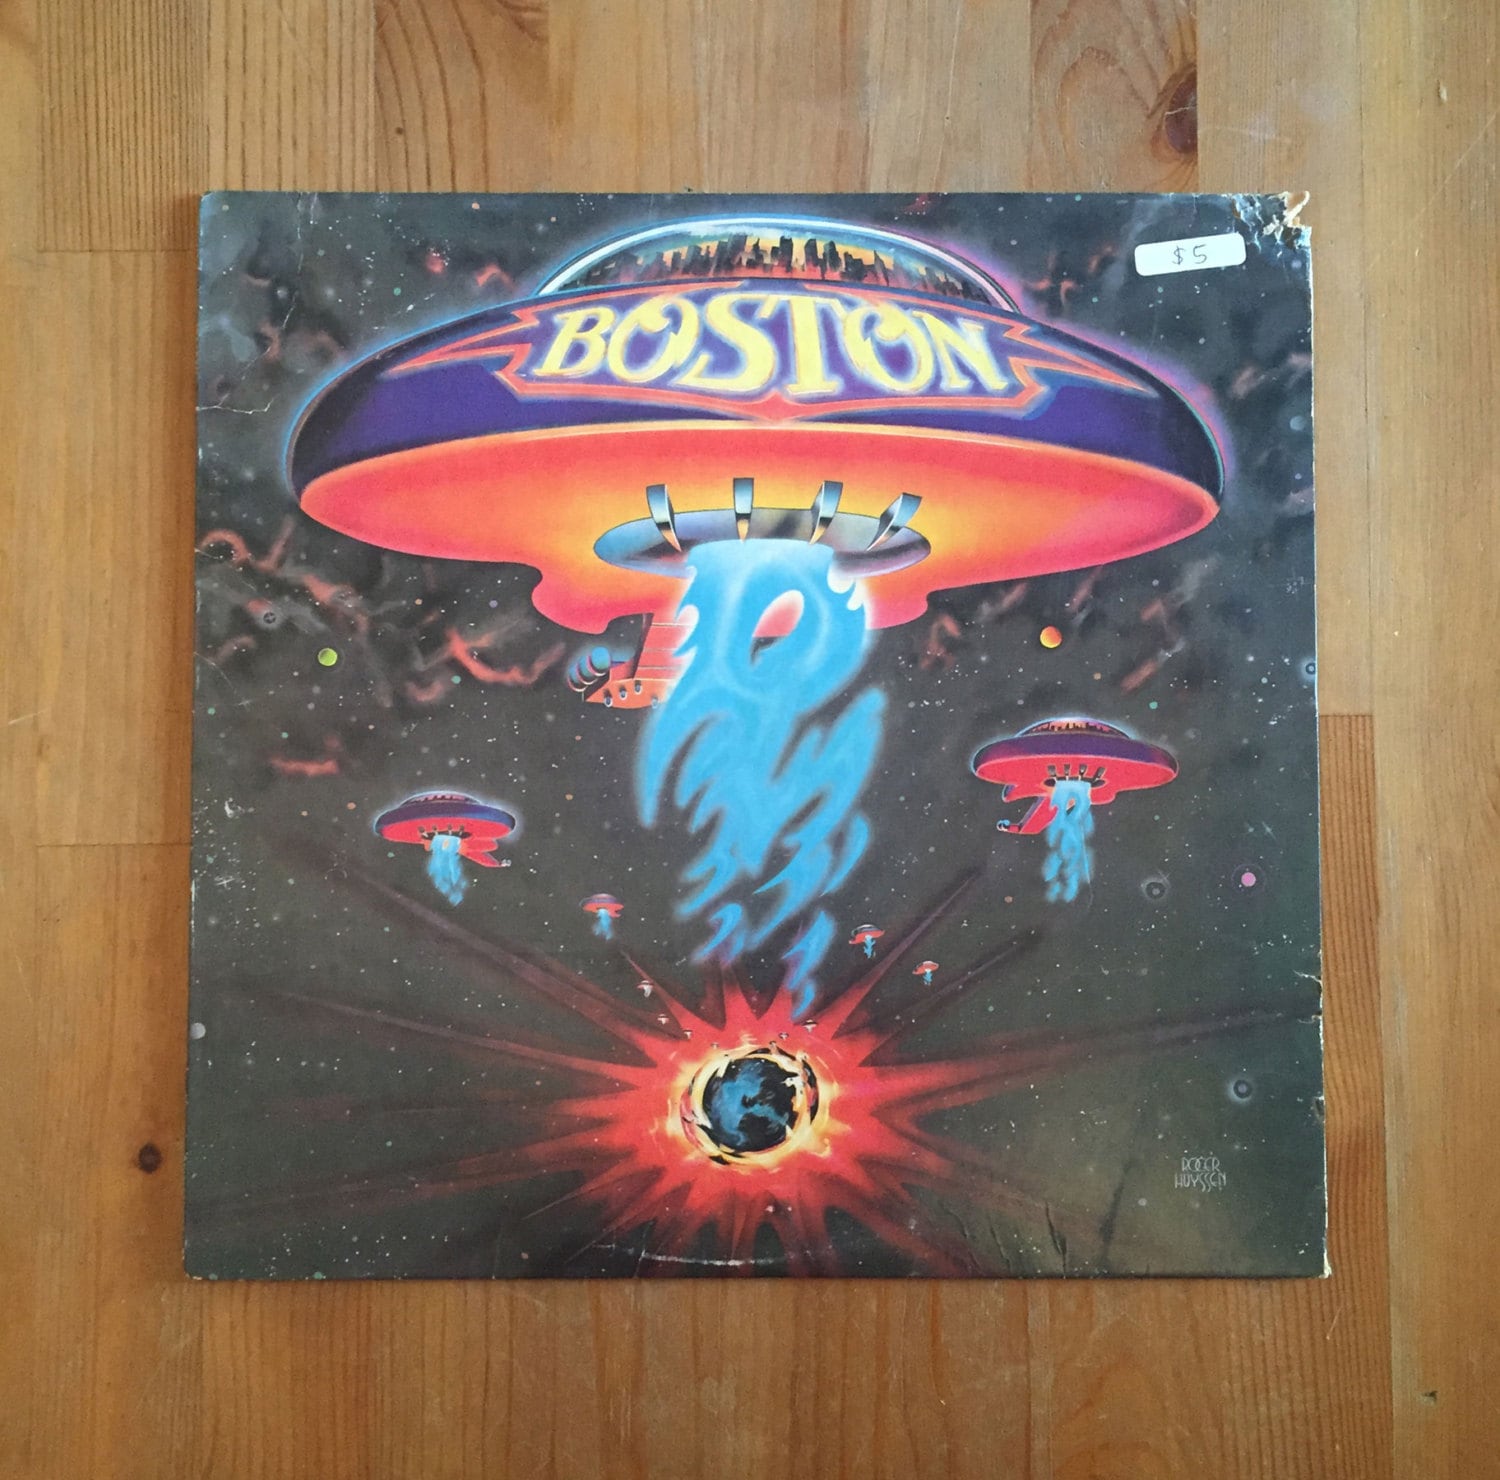 Boston debut album - apospring